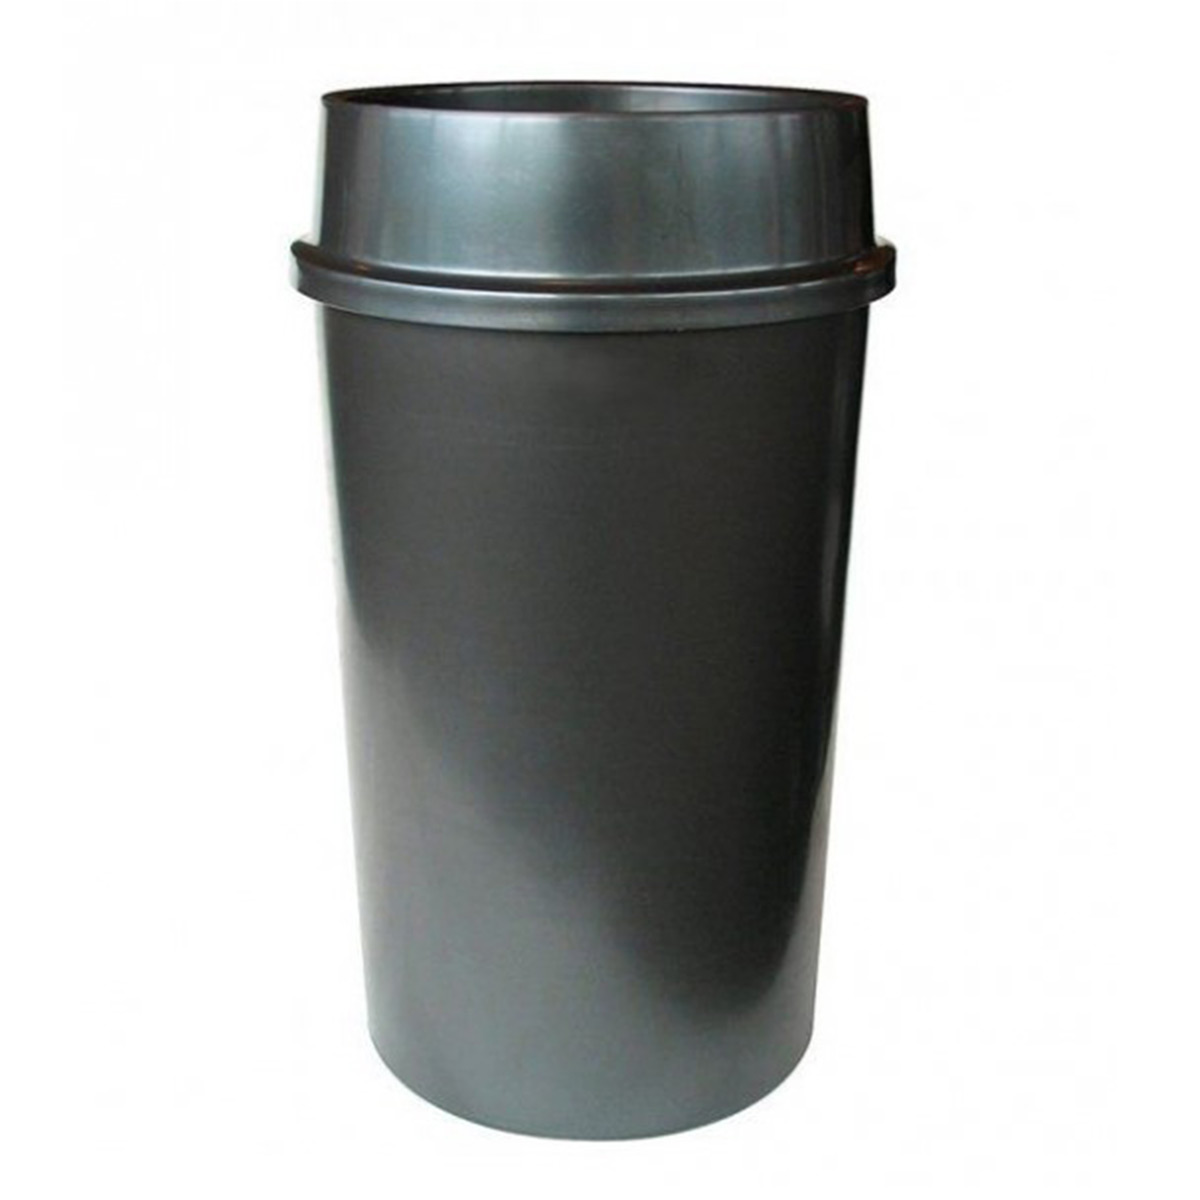 bins-bin-liners-bags-rubbish-bins-rubbish-bin-60L-litre-maxi-tilt-top-titanium-perroplas-tilt-top-keep-rubbish-secure-contain-odours-convenient-easy-solution-vjs-distributors-PRUB60SETTIT